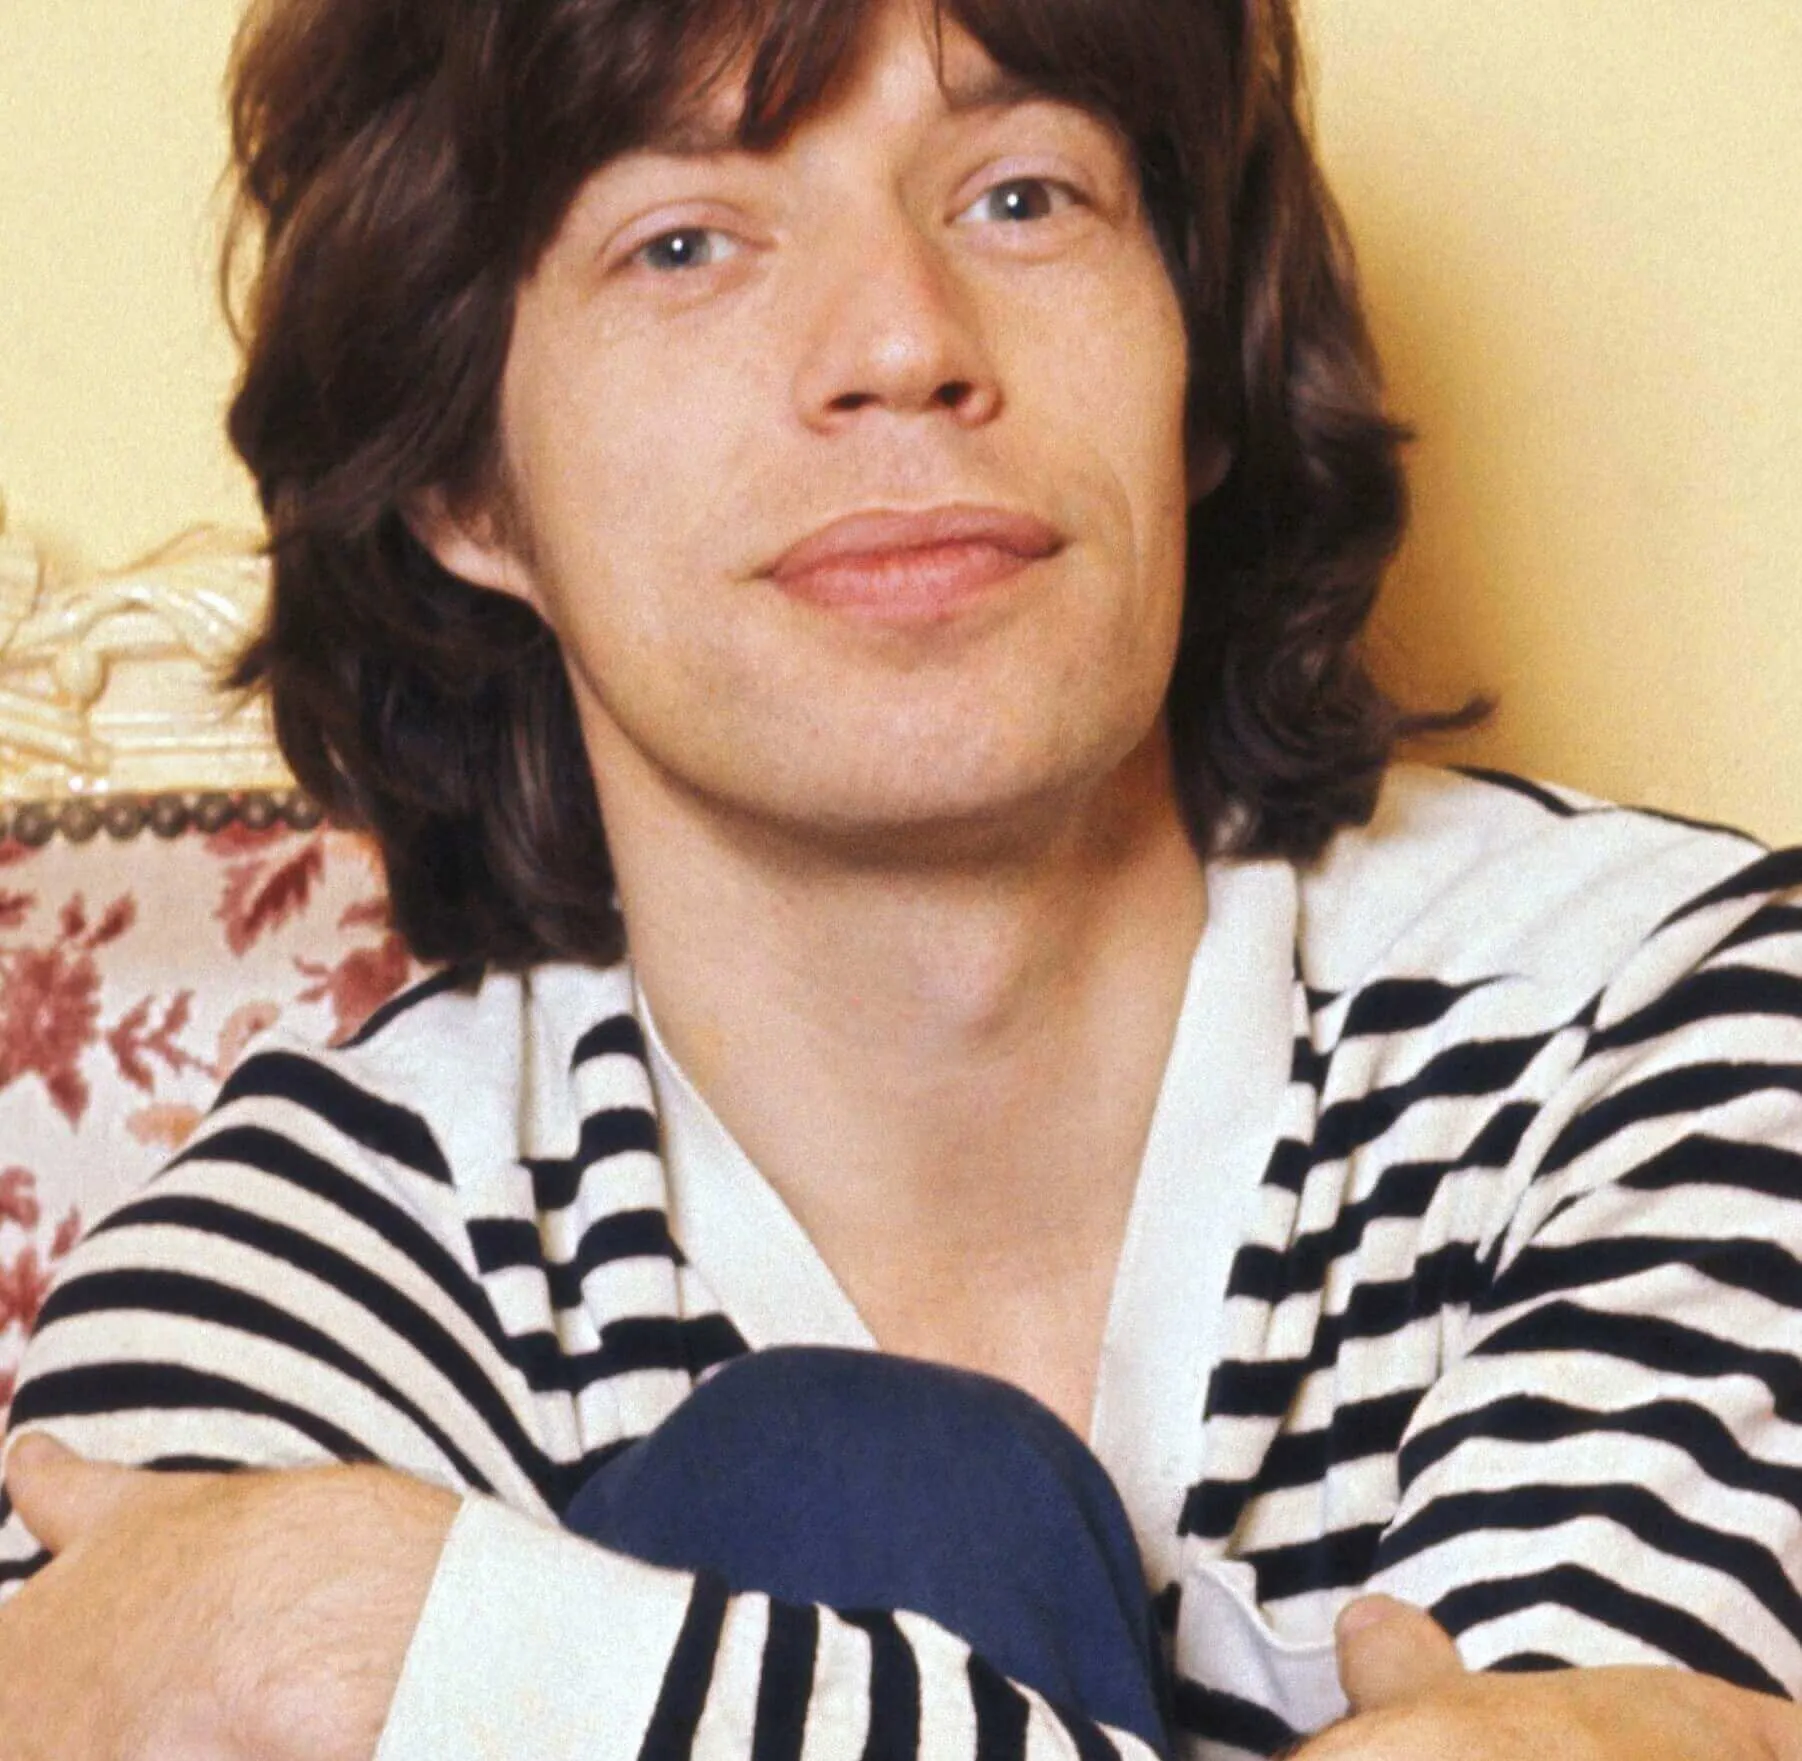 Mick Jagger wearing stripes